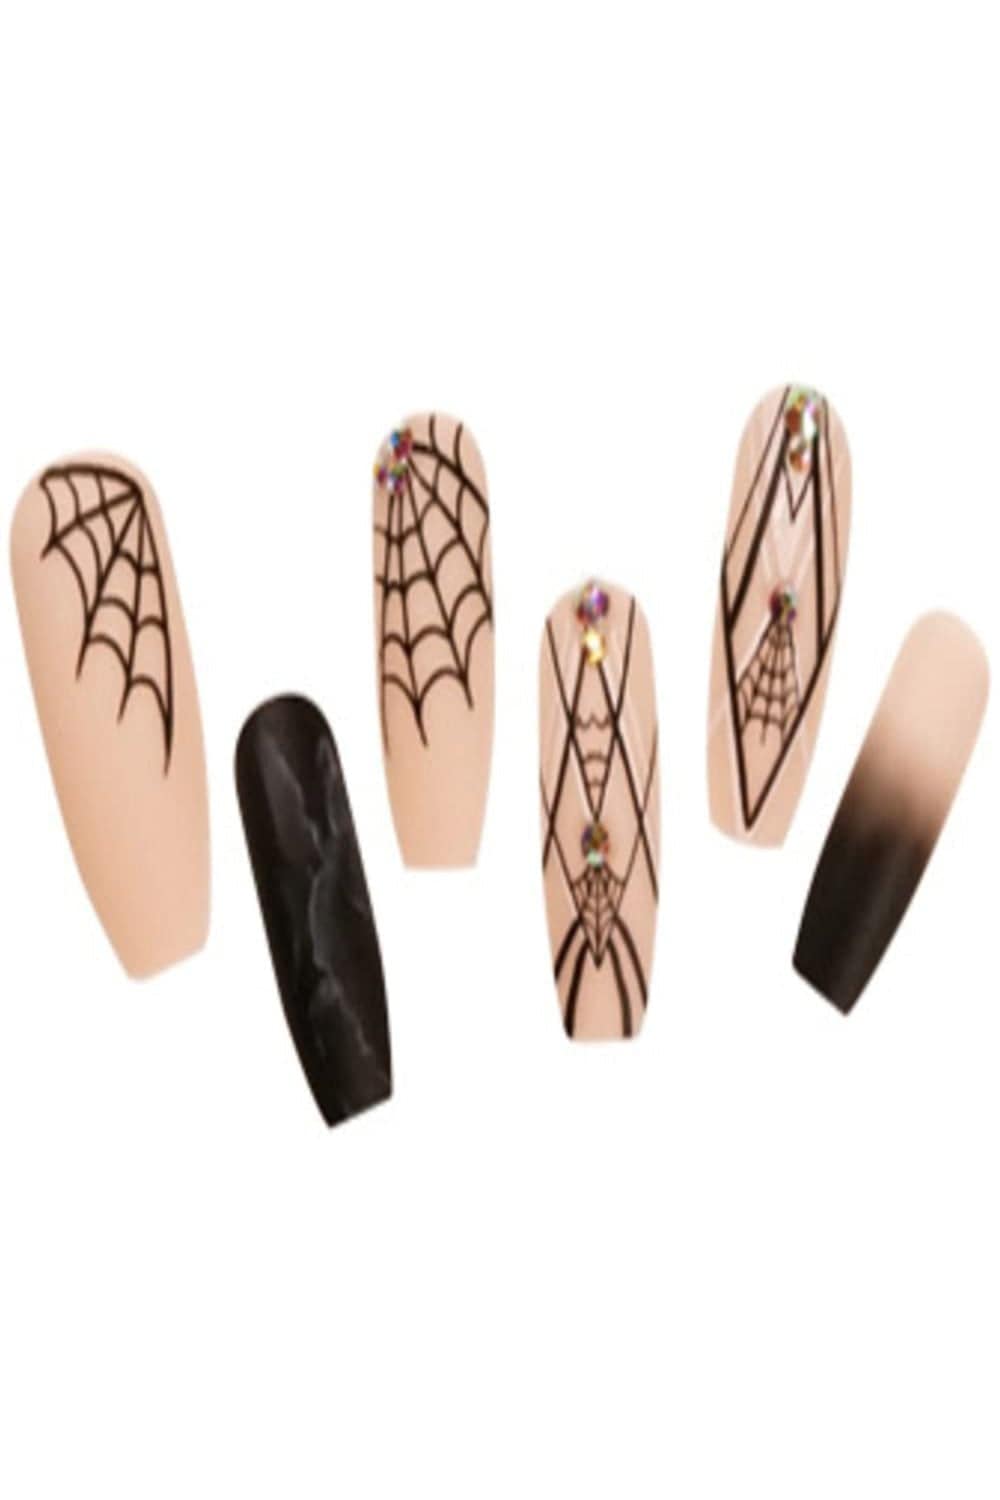 Halloween Spider Web Coffin Tip Press On Nails Kit - TGC Boutique - Halloween Press On Nails